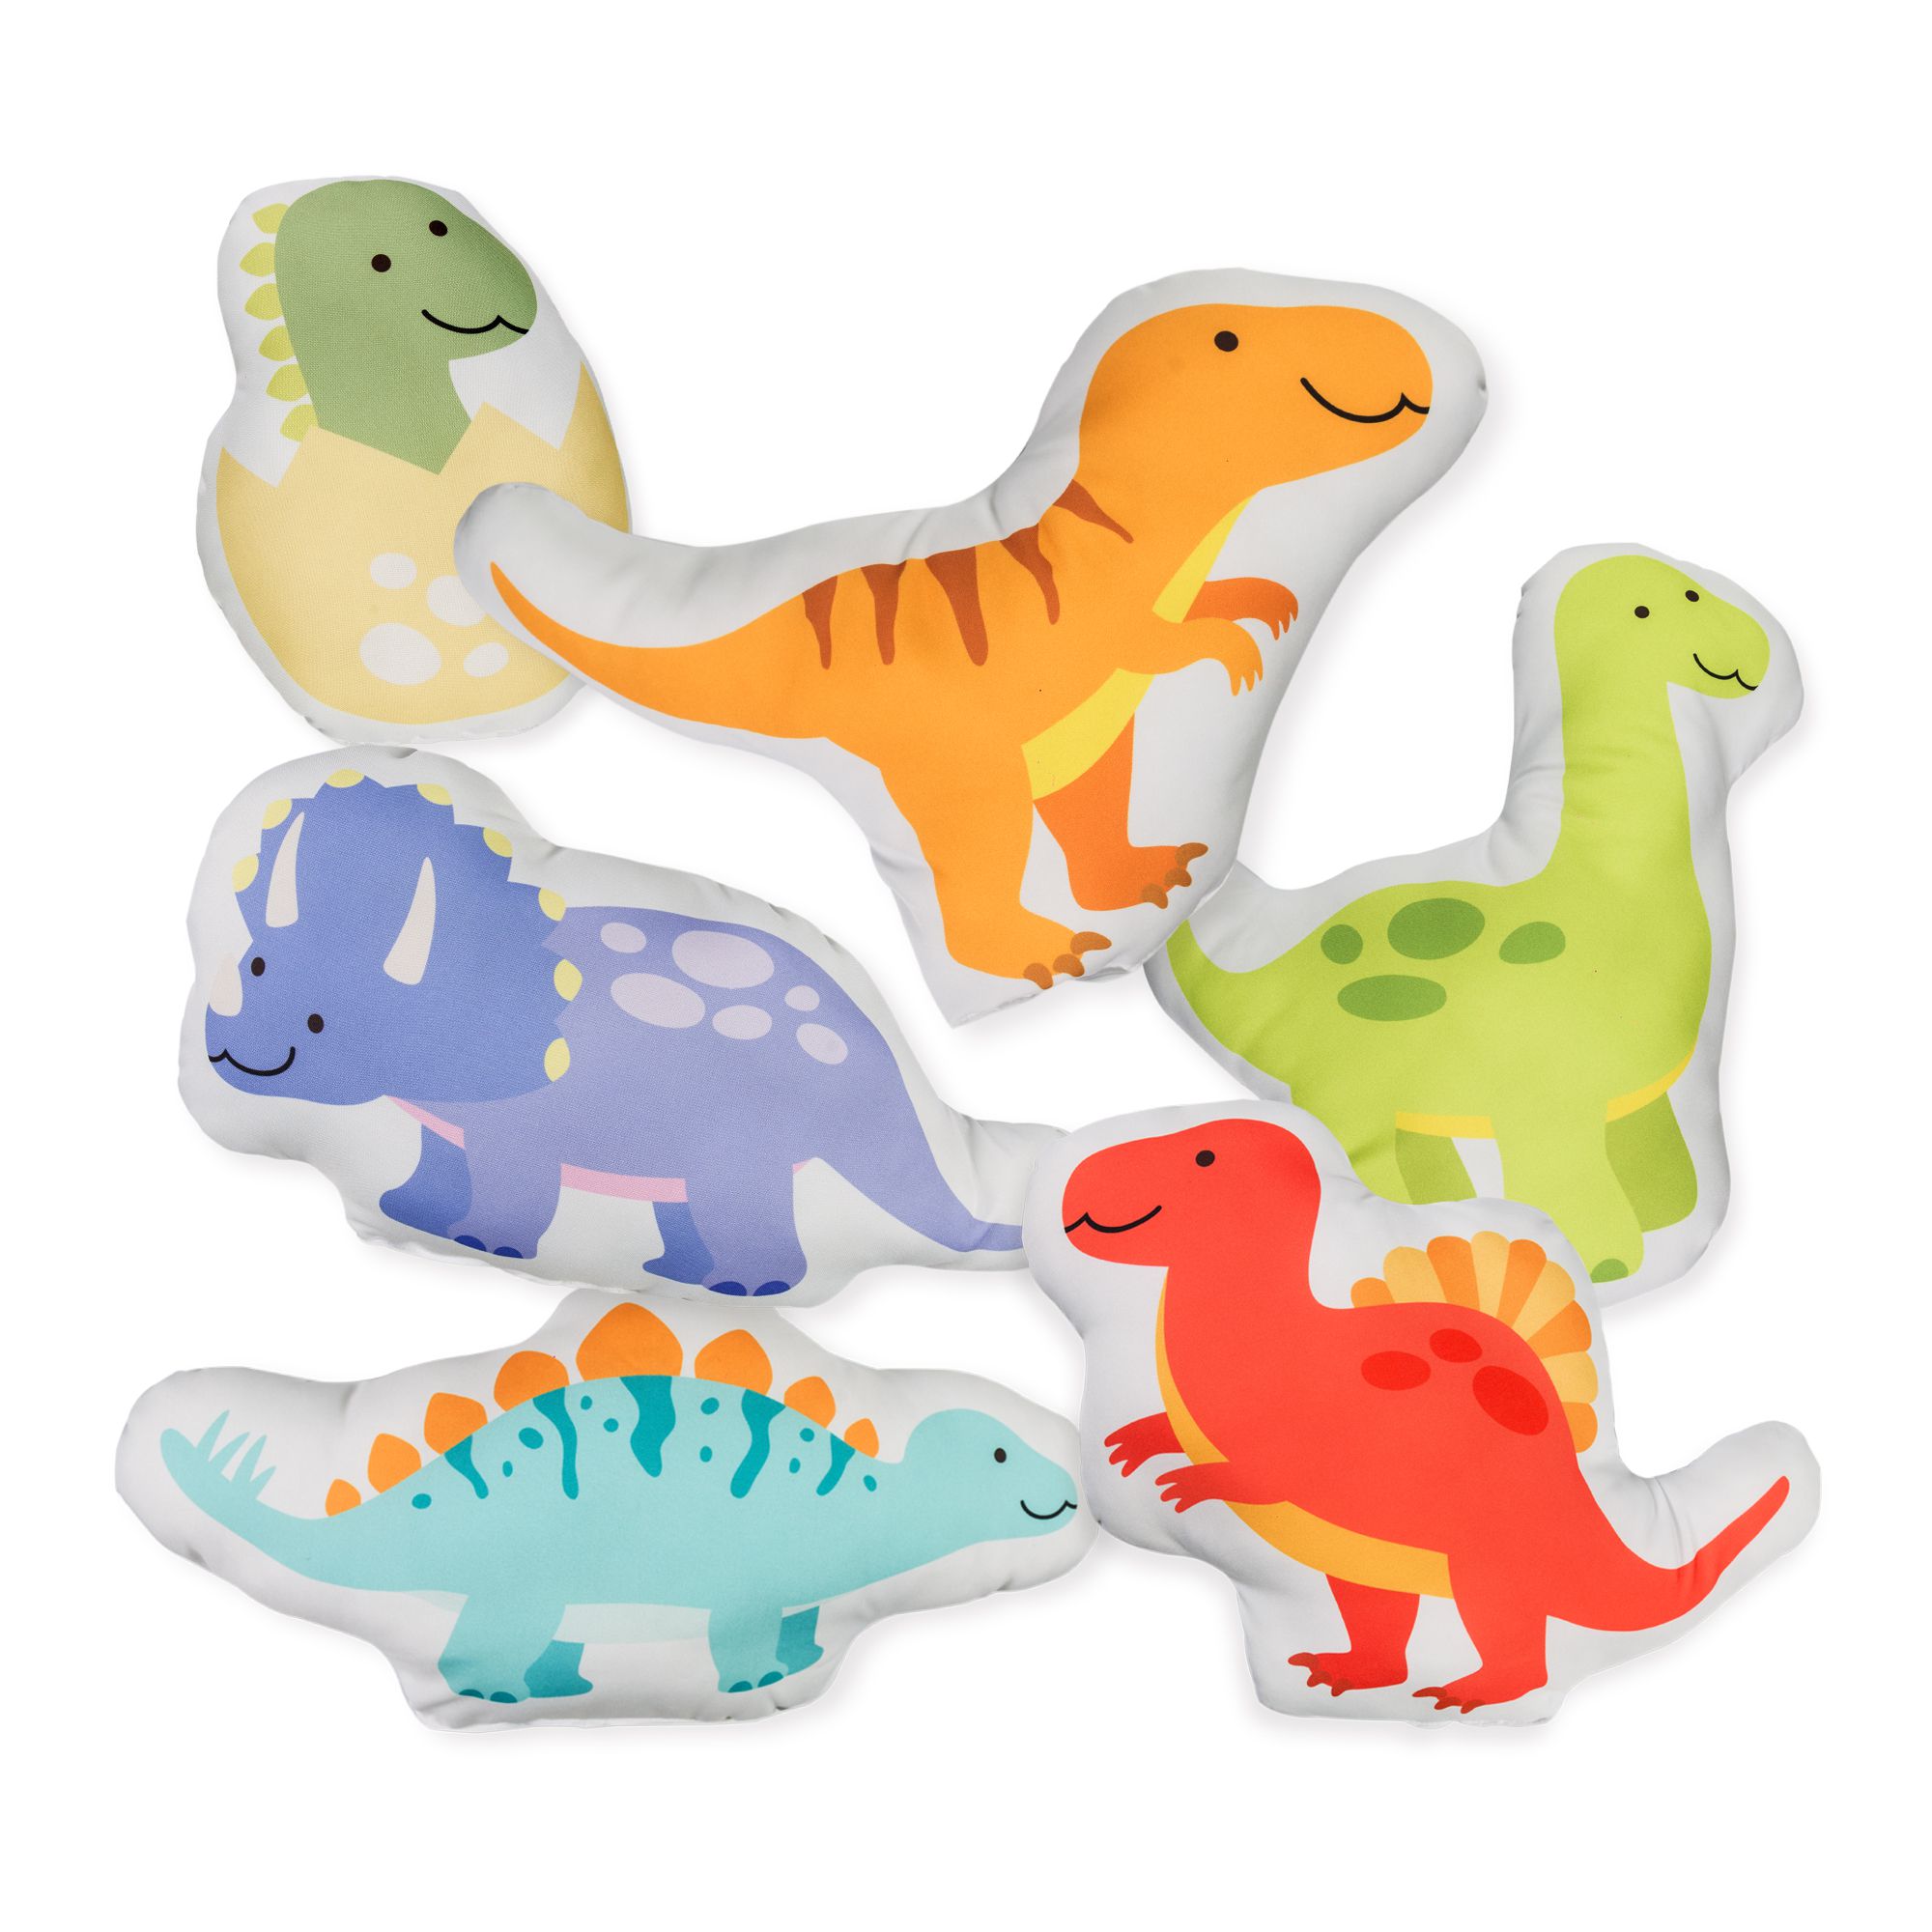 Kit 5 Almofadas Toy Dinossauros - Miüdo